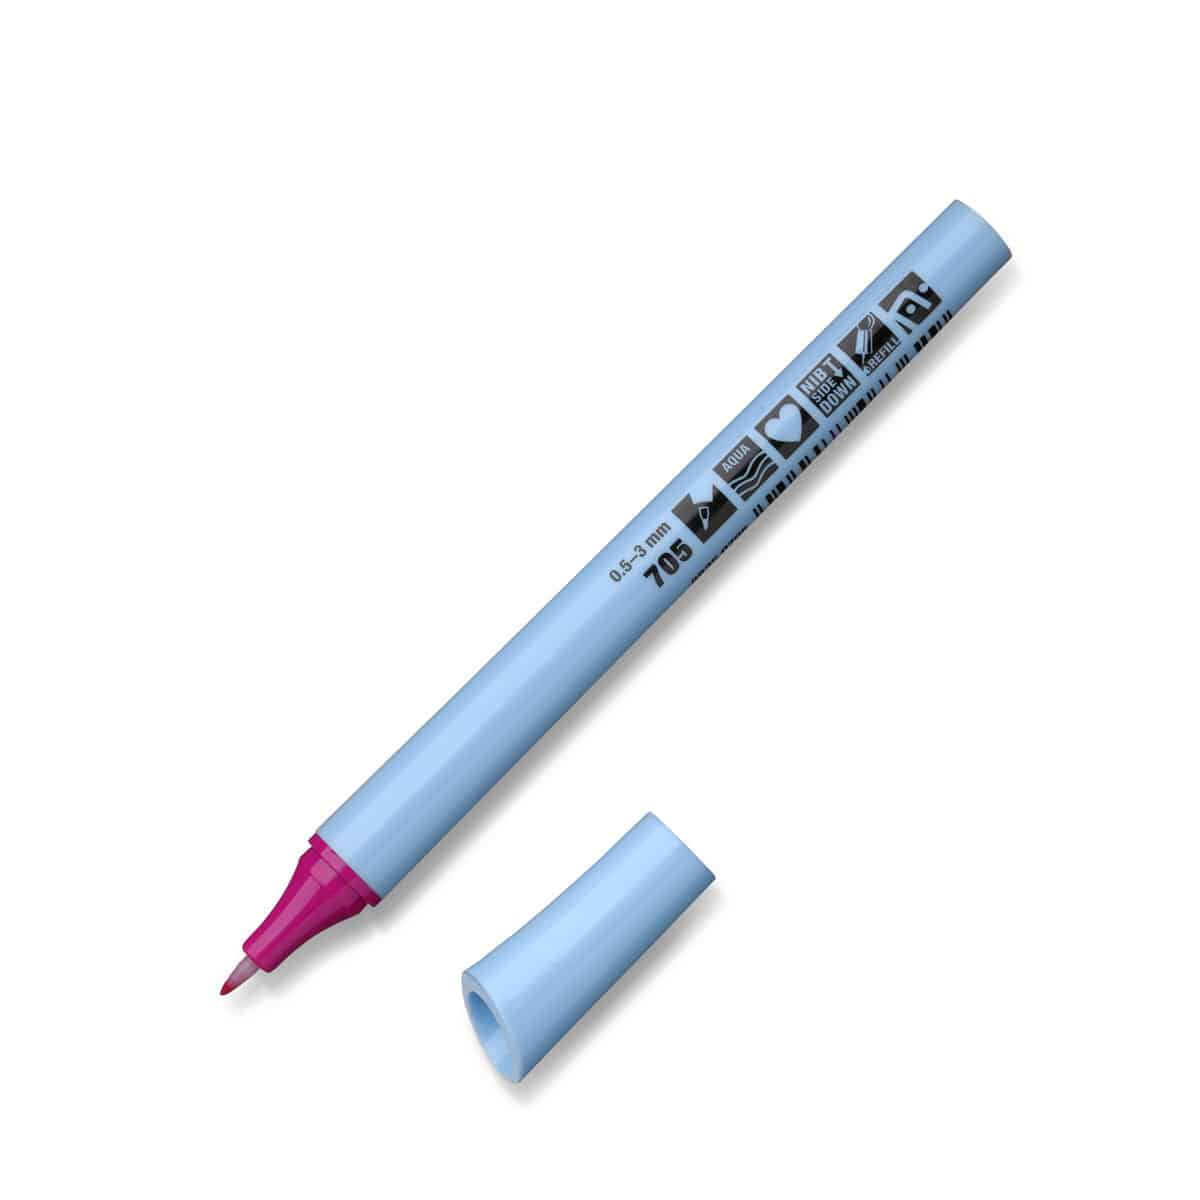 Neuland FineOne® Flex, flexible fiber nib 0.5-3 mm, single colors- 705 brombeere